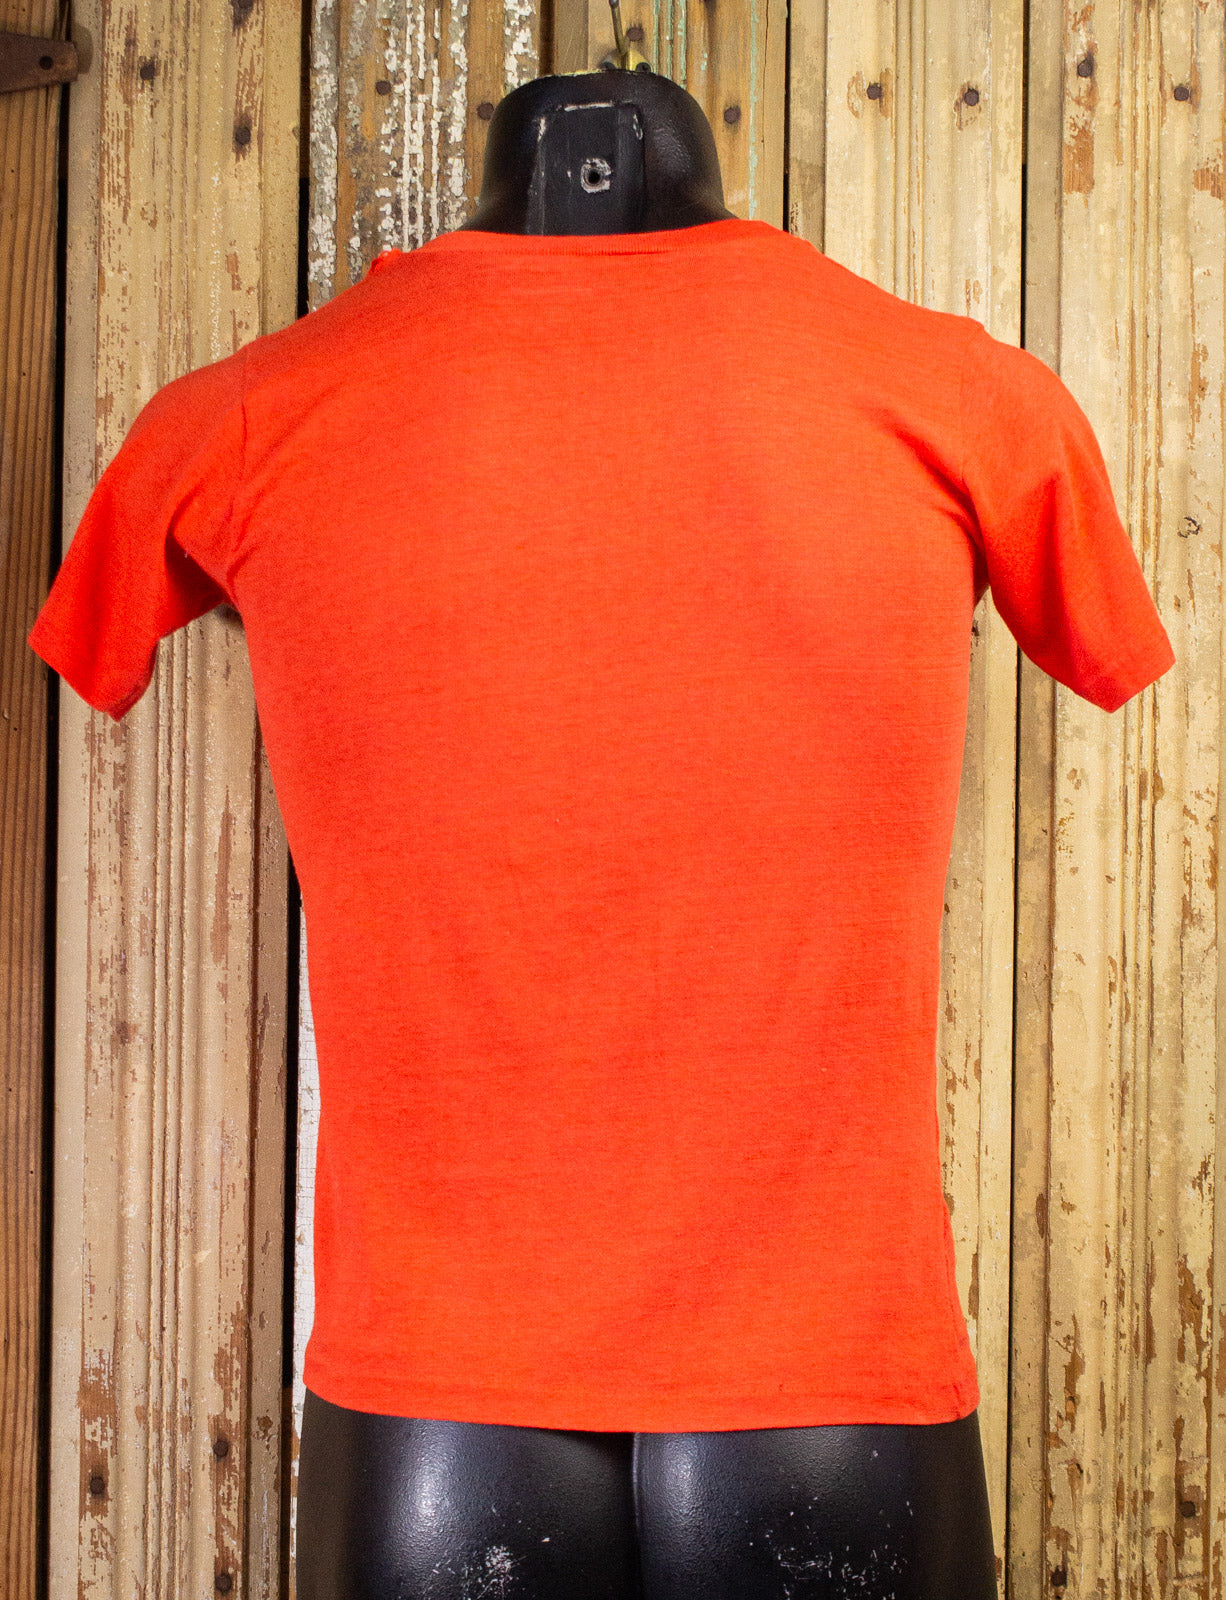 Vintage Weed of Wisdom Graphic T Shirt 70s Orange XS